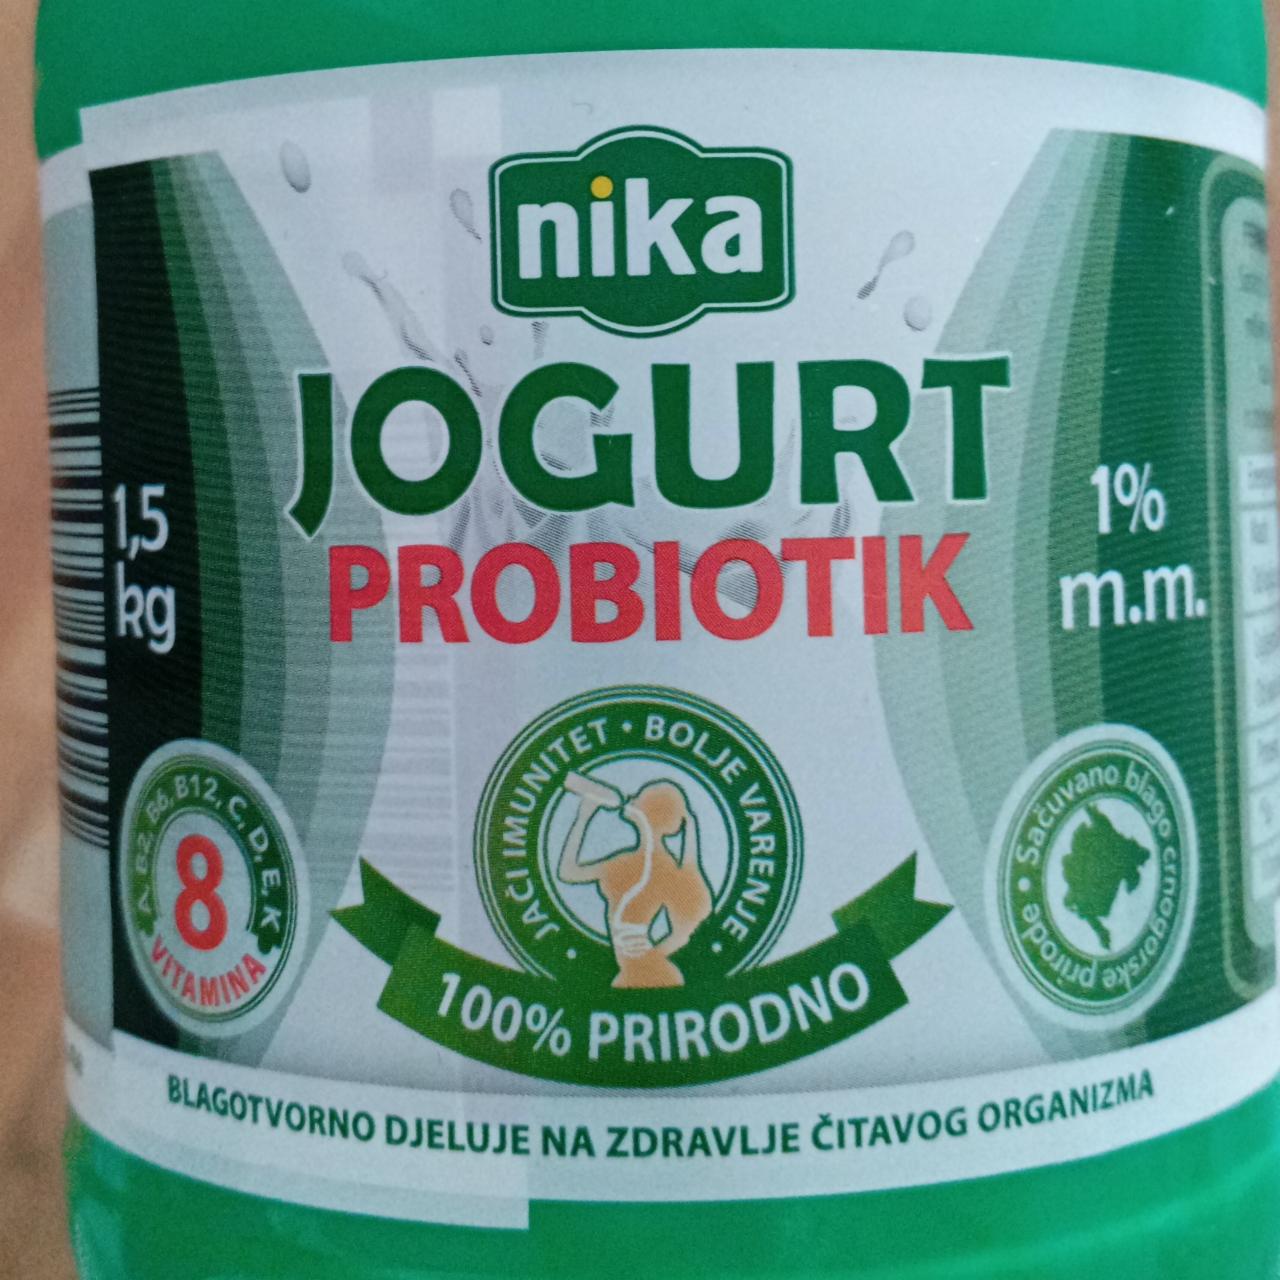 Фото - Jogurt probiotic 1% Nika